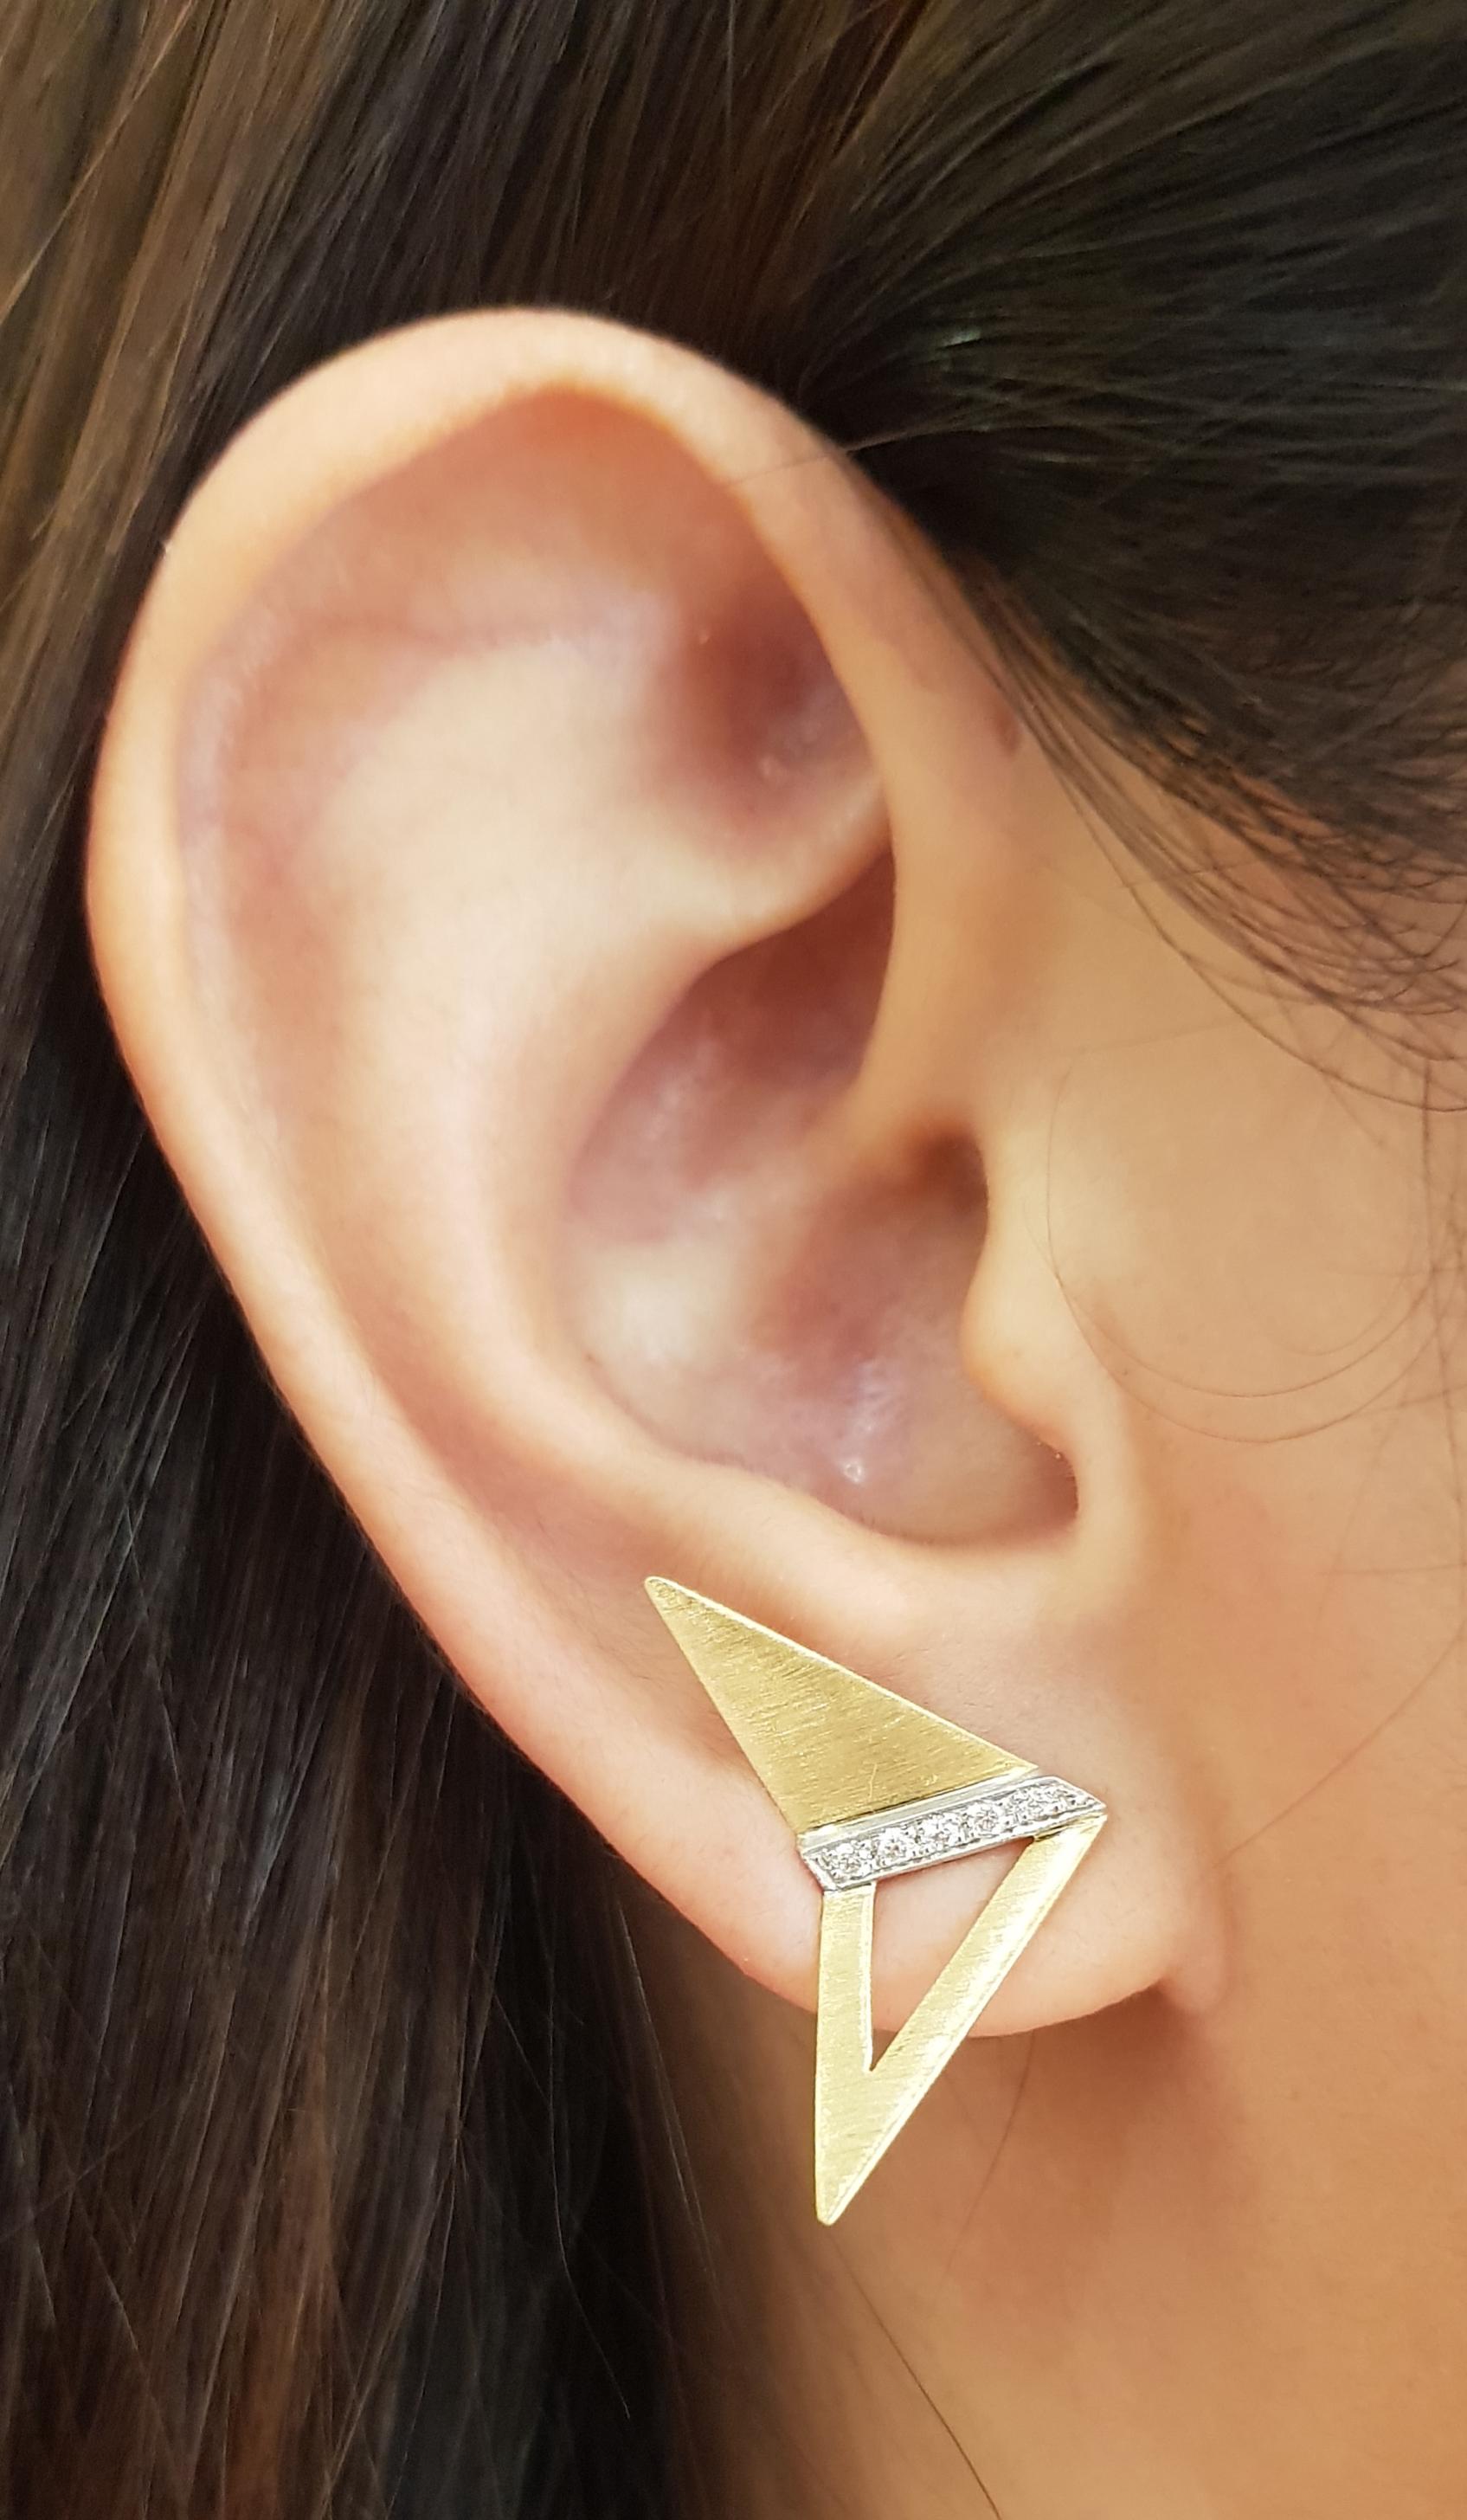 Diamond 0.10 carat Earrings set in 18 Karat Gold Settings by Kavant & Sharart

Width: 1.7 cm 
Length: 2.3 cm
Total Weight: 4.37 grams

